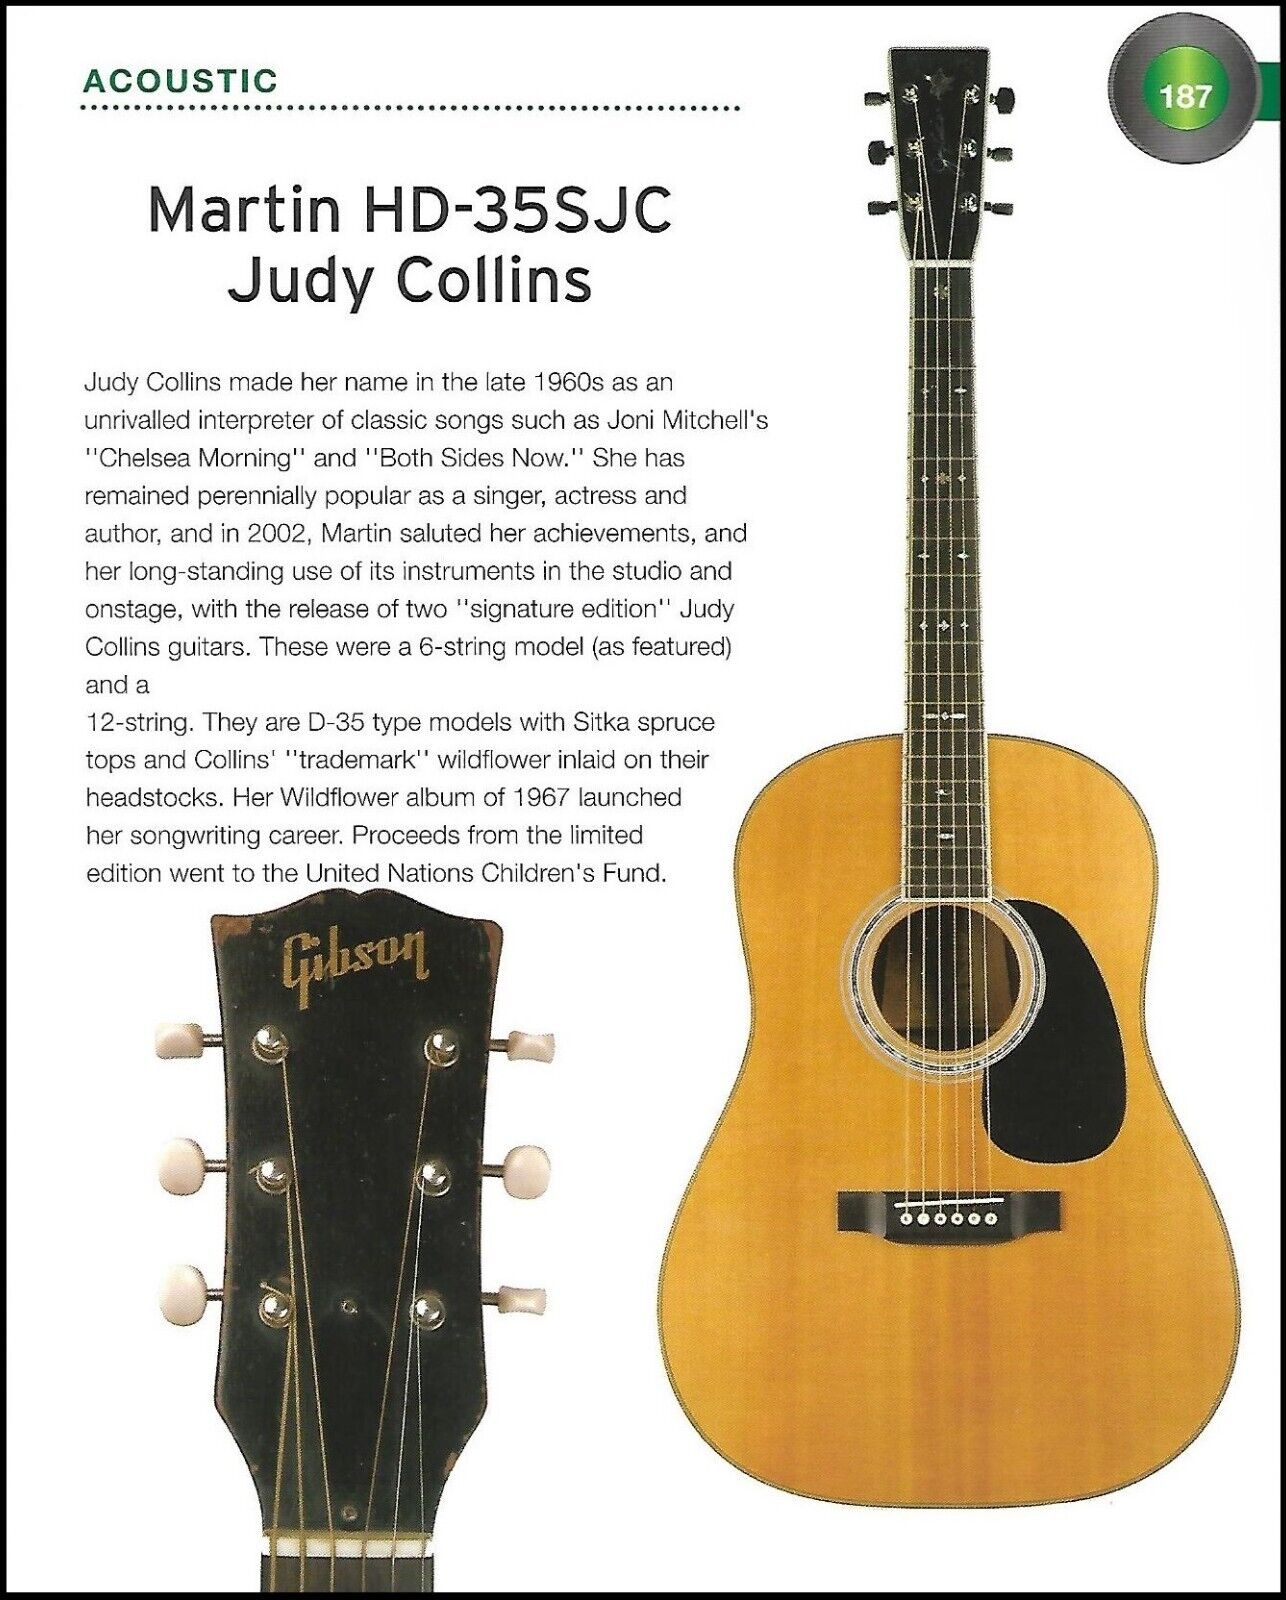 Martin Judy Collins HD-35SJC + HD12-string acoustic guitar history article